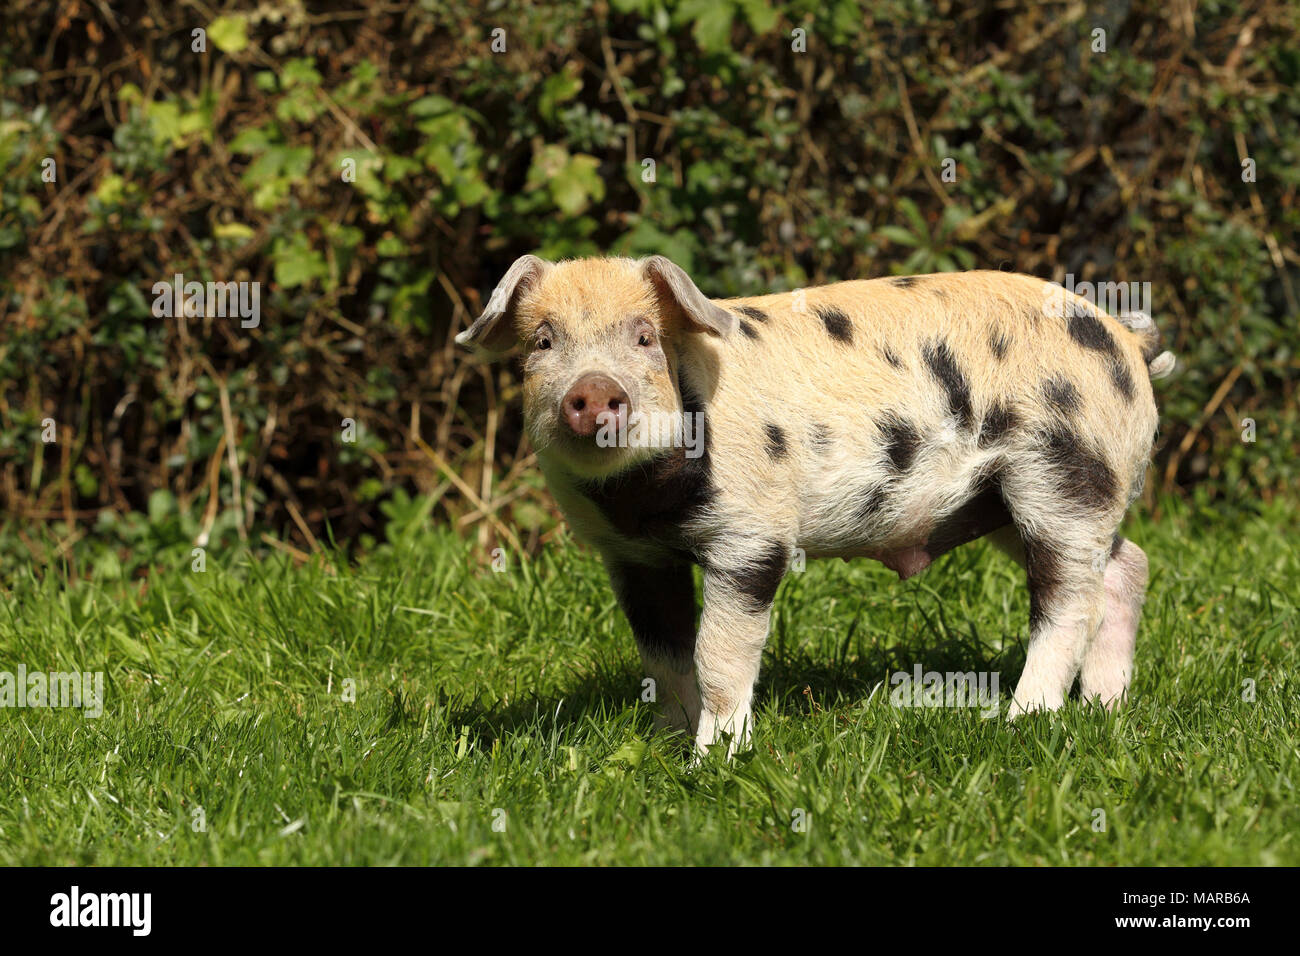 Domestic Pig, Turopolje x ?. Piglet (5 weeks old) standing in grass. Germany Stock Photo